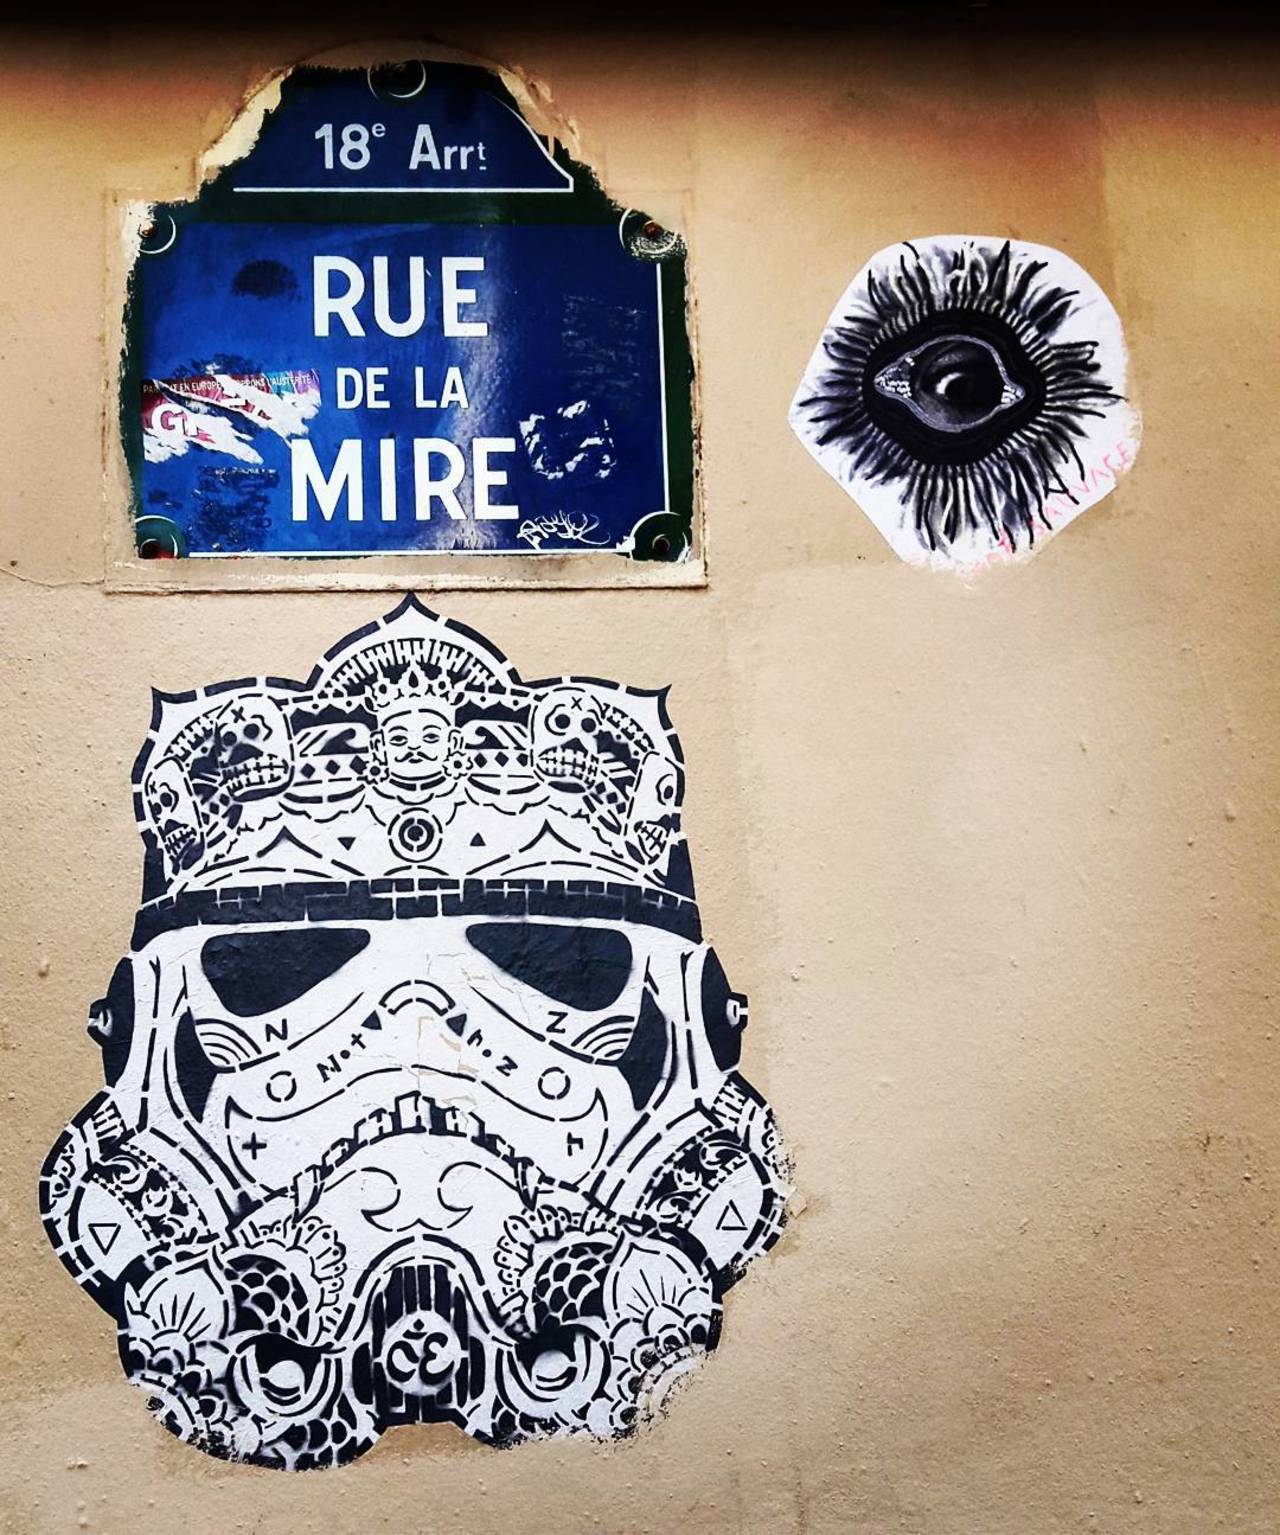 #Paris #graffiti photo by @anne.batellier http://ift.tt/1ZC4yvj #StreetArt http://t.co/gd4gMq2oJO